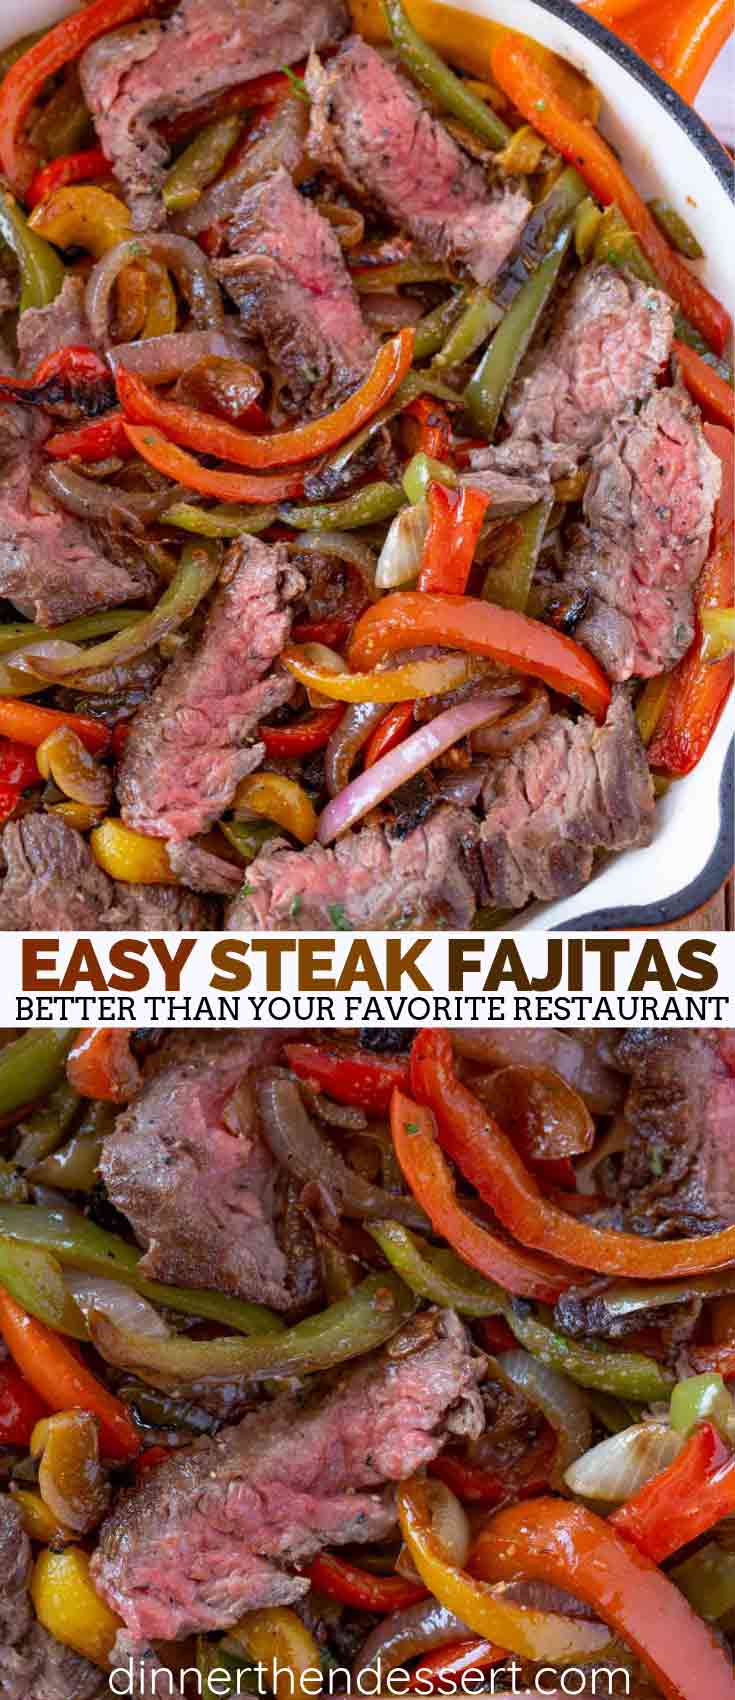 Photo Collage of Steak Fajitas